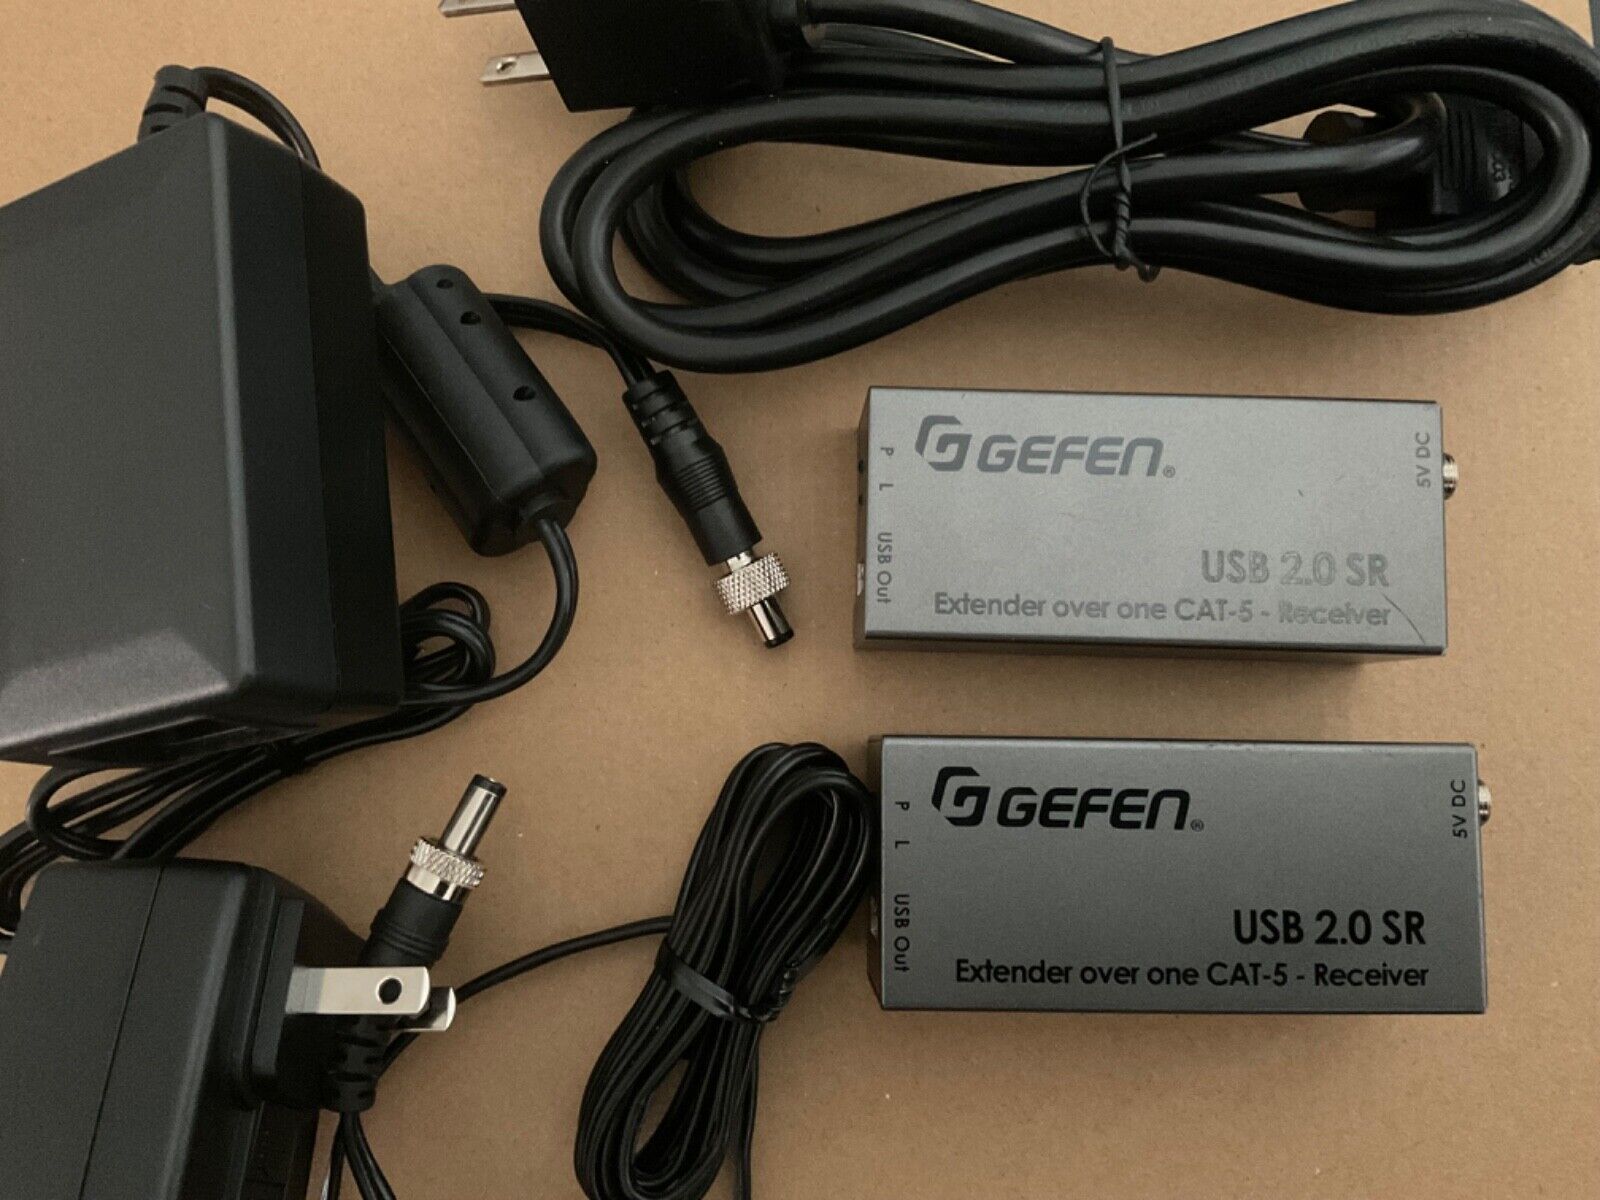 Gefen EXT-USB2.0-LR Cat5 USB 2.0 Extender S & R w/ power cords (04202024)